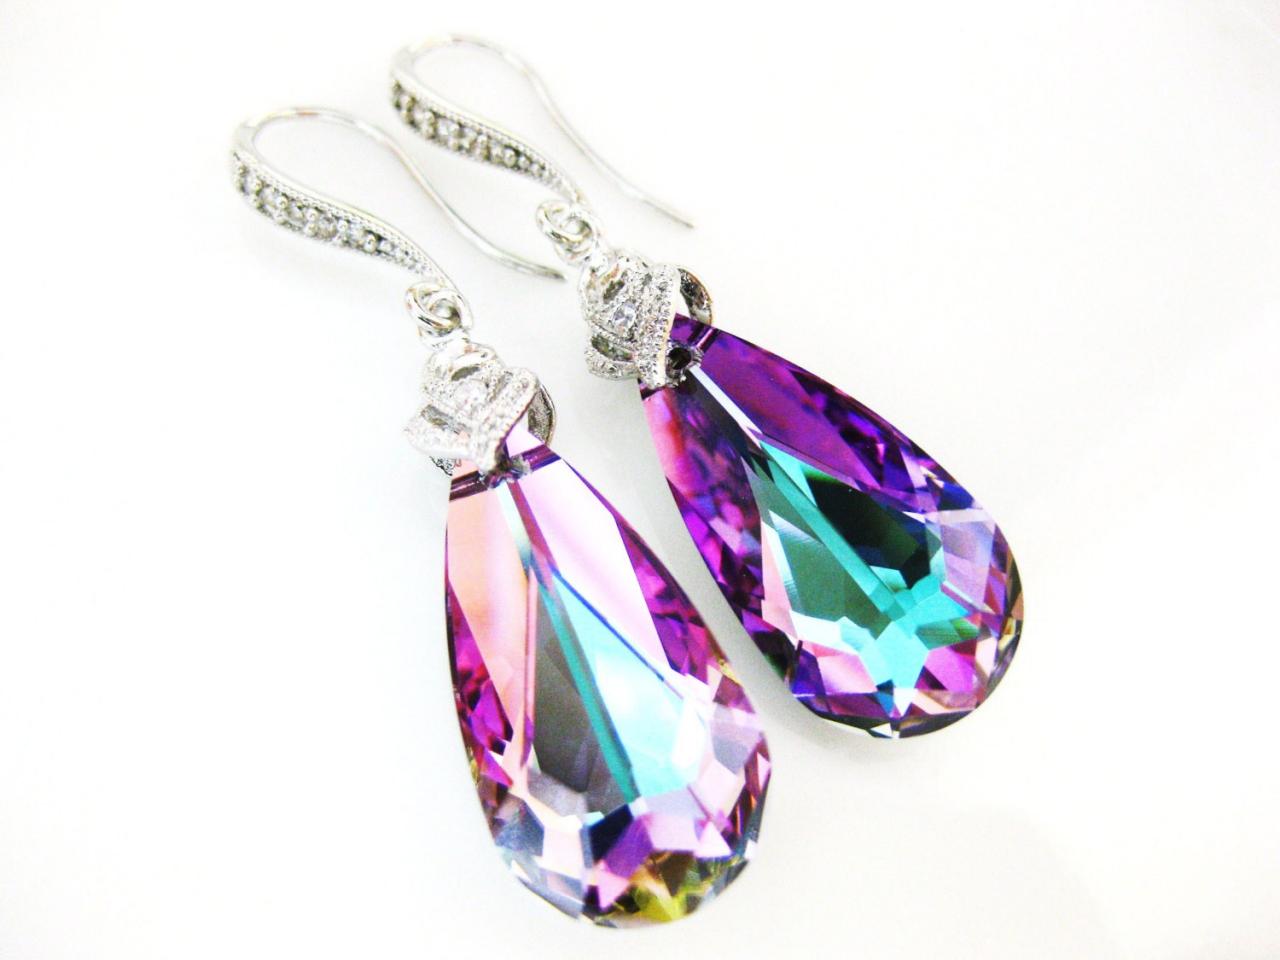 Purple Crystal Earrings Swarovski Vitrail Light Crystal Teardrop Earrings Bridesmaid Gift Wedding Jewelry Bridal Drop Earrings (e025)